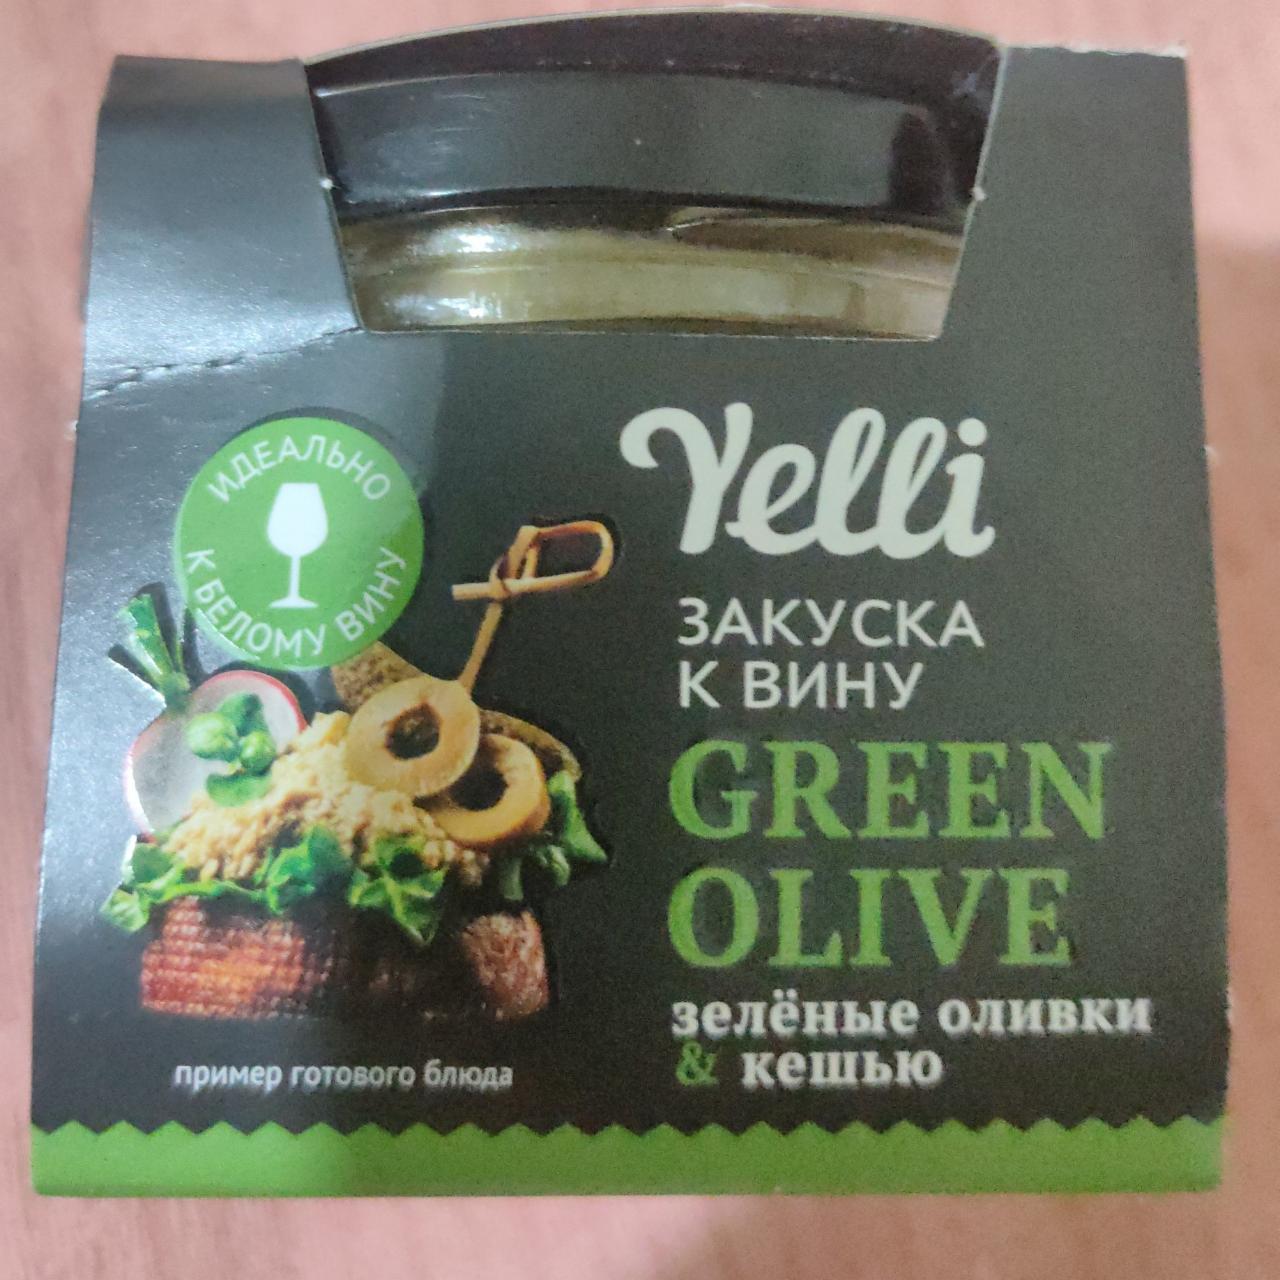 Фото - Топпинги для брускет Green olive Зеленая оливка Yelli